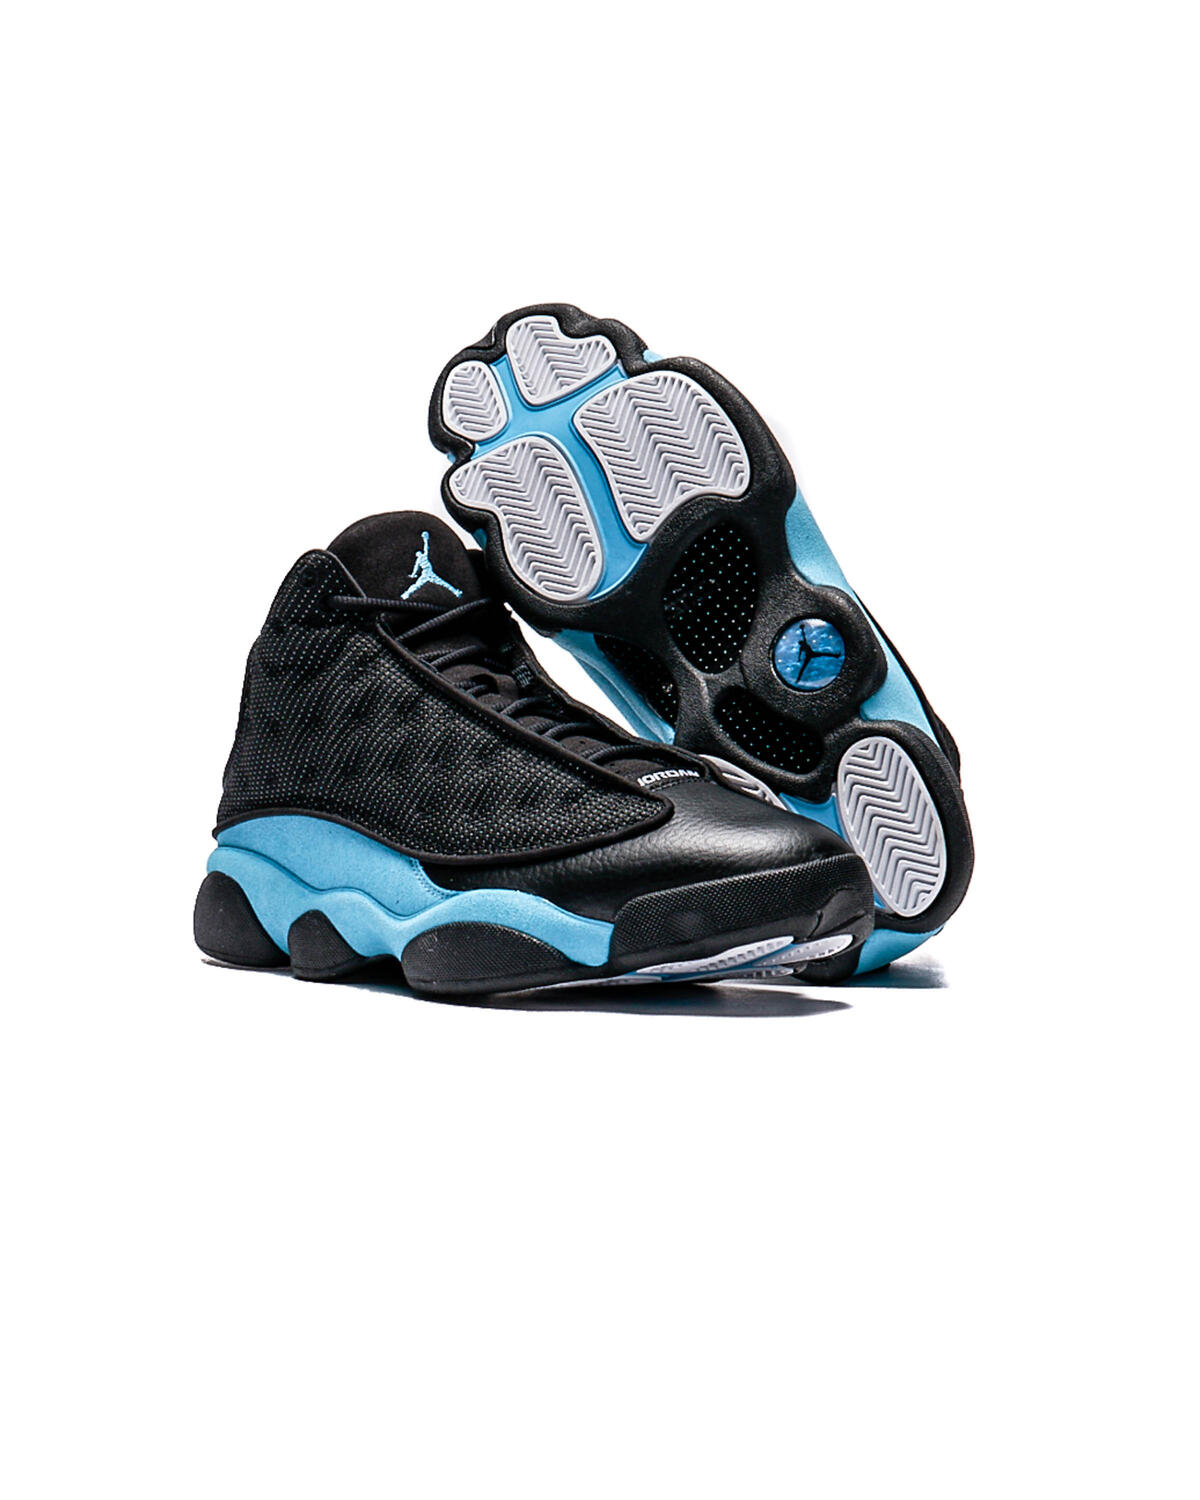 Sneakers Release – Jordan 13 Retro “Black/University  Blue/White” Men’s & Kids’ Shoe Launching 12/23